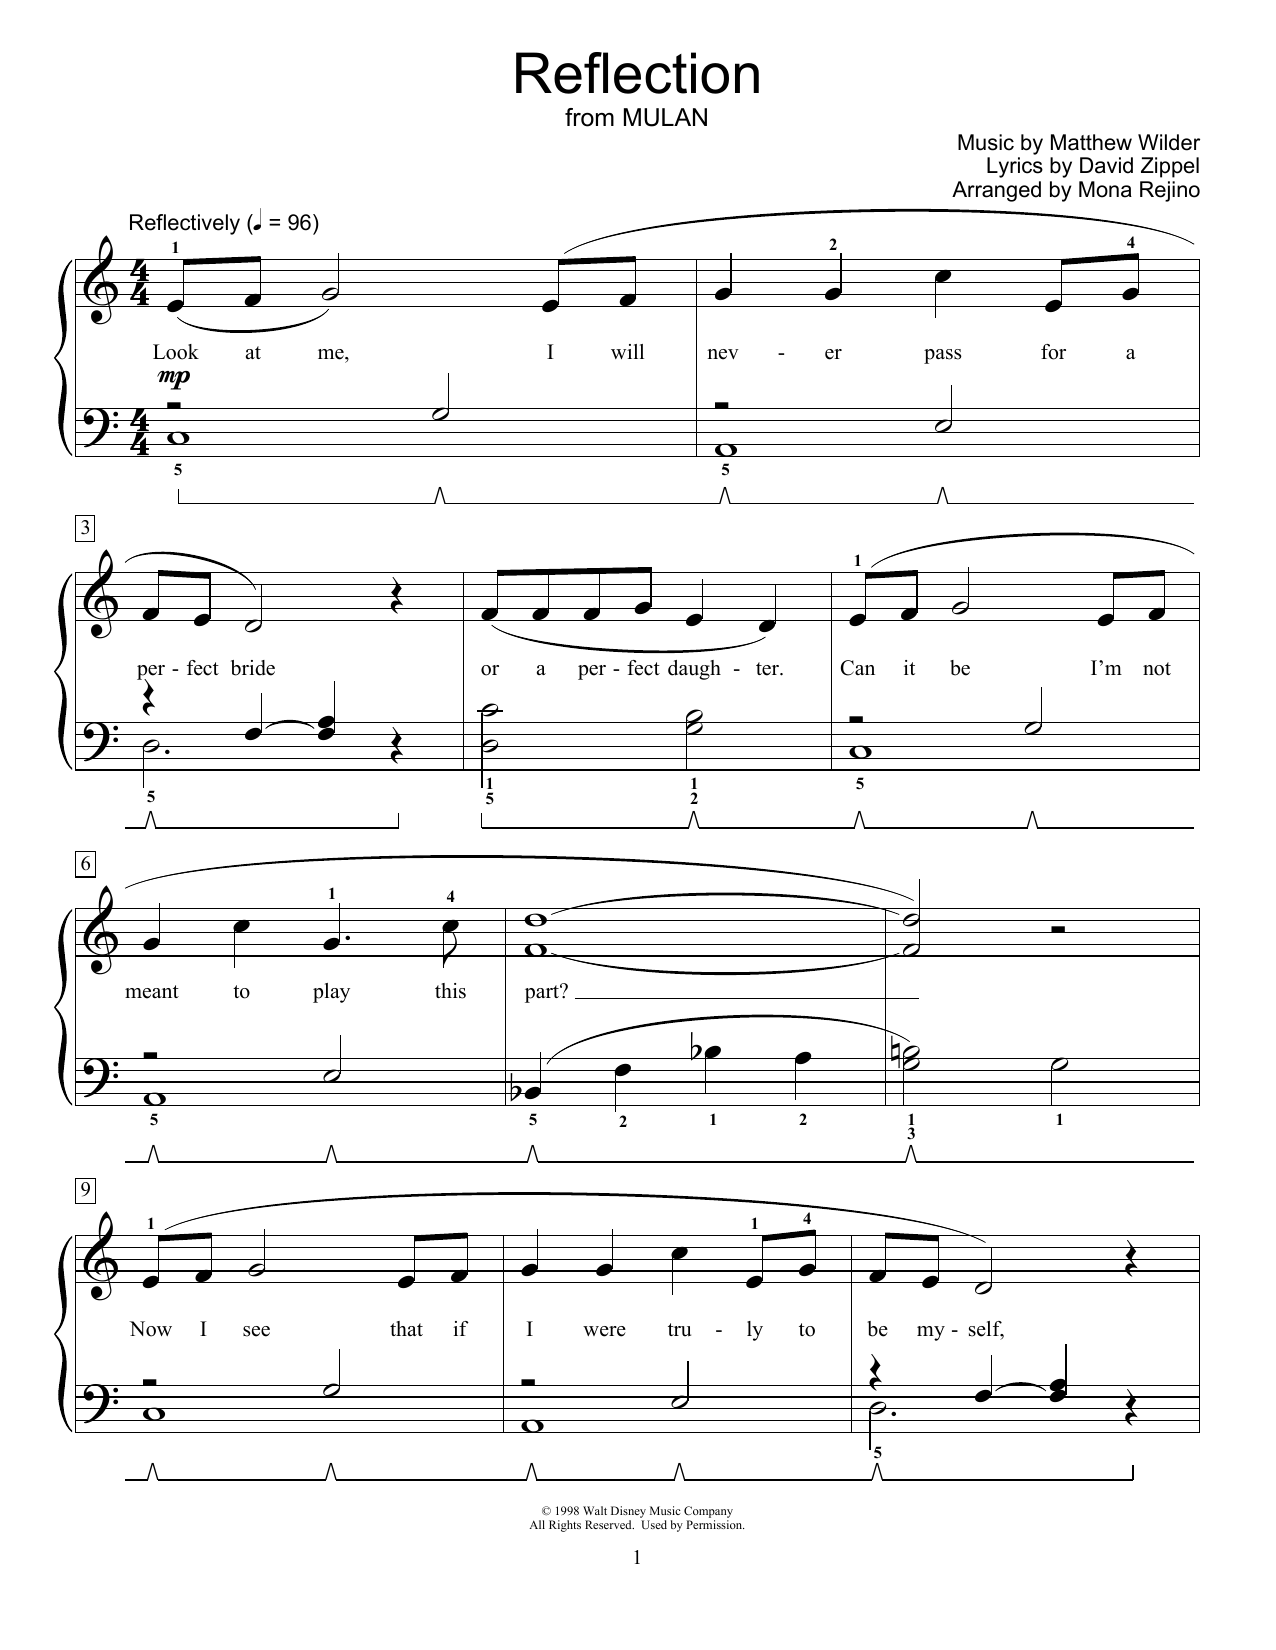 reflection mulan piano sheet music easy pdf